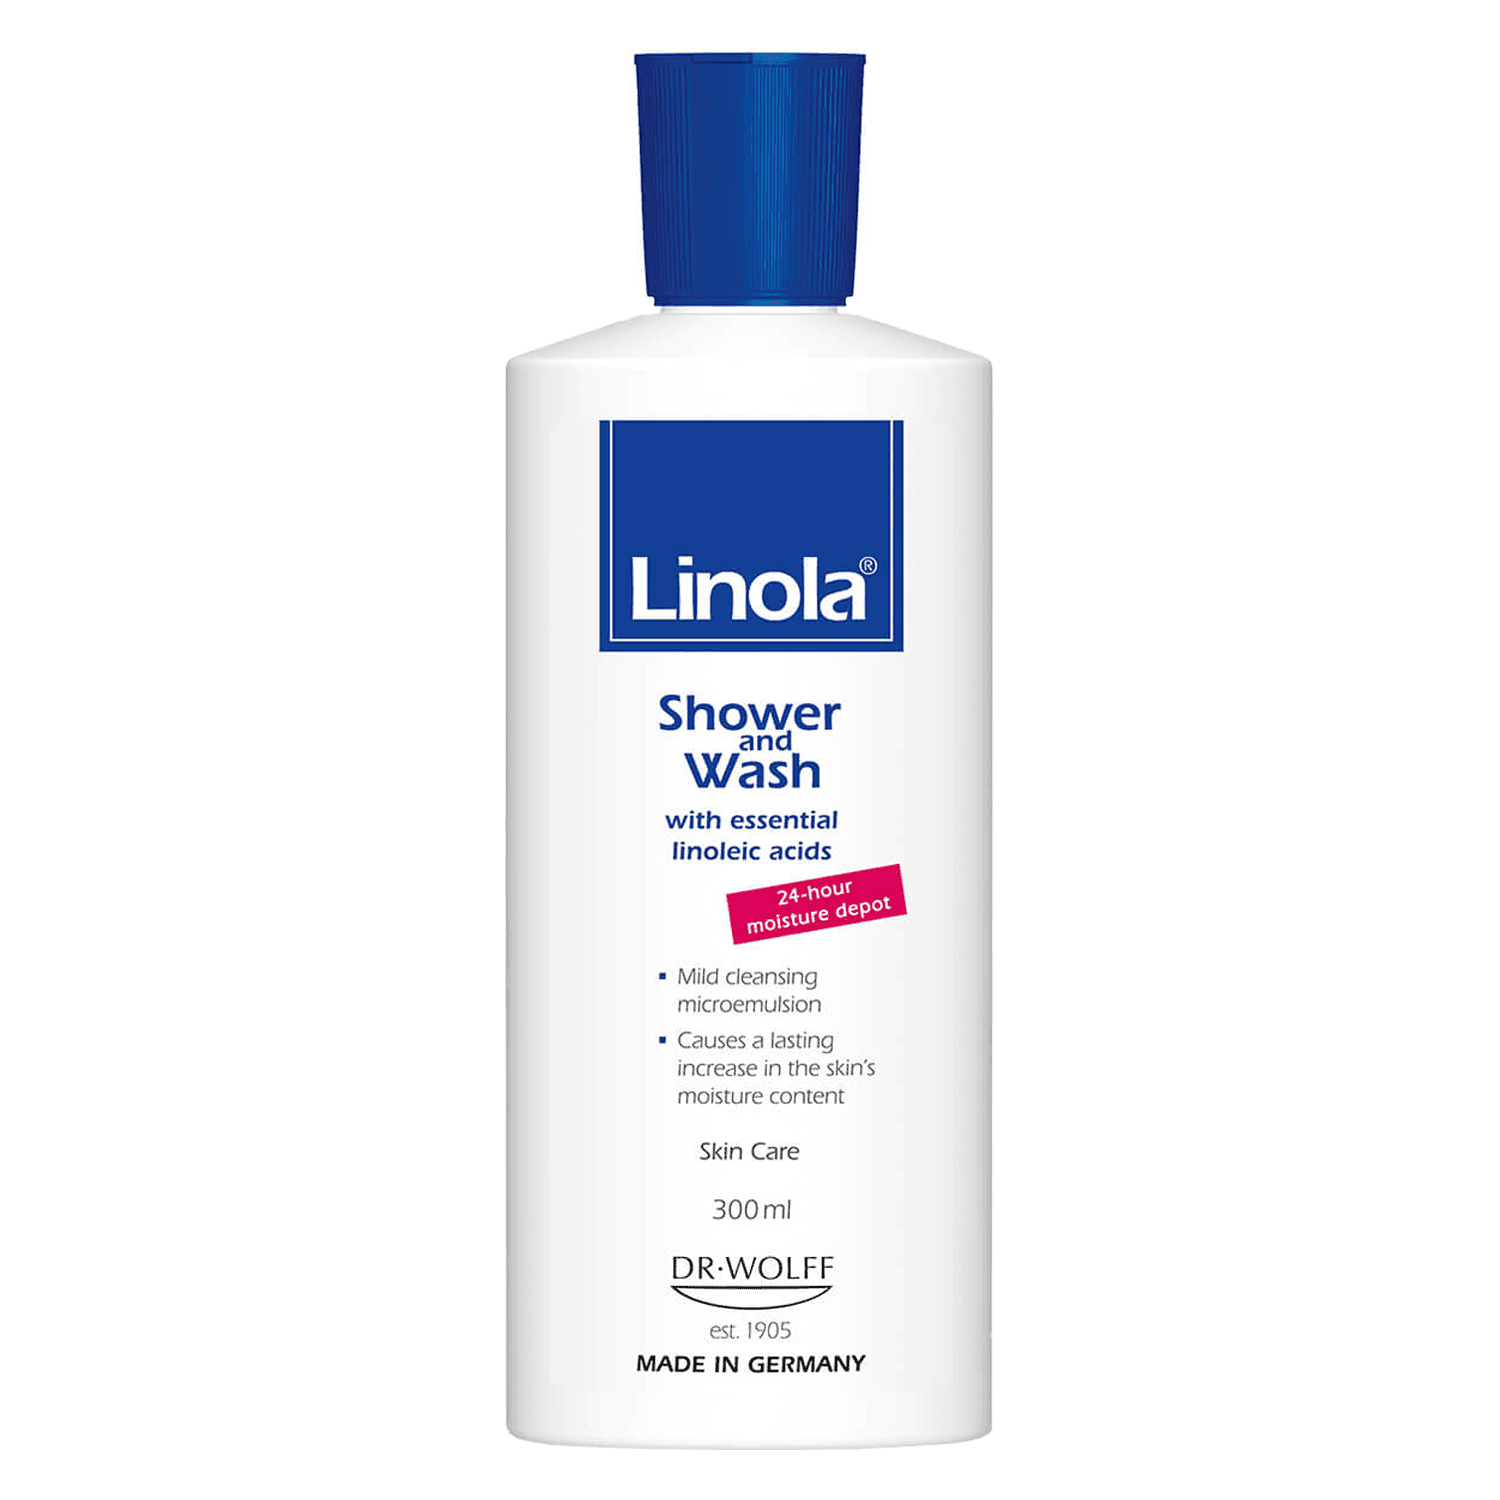 Linola - Shower and Wash